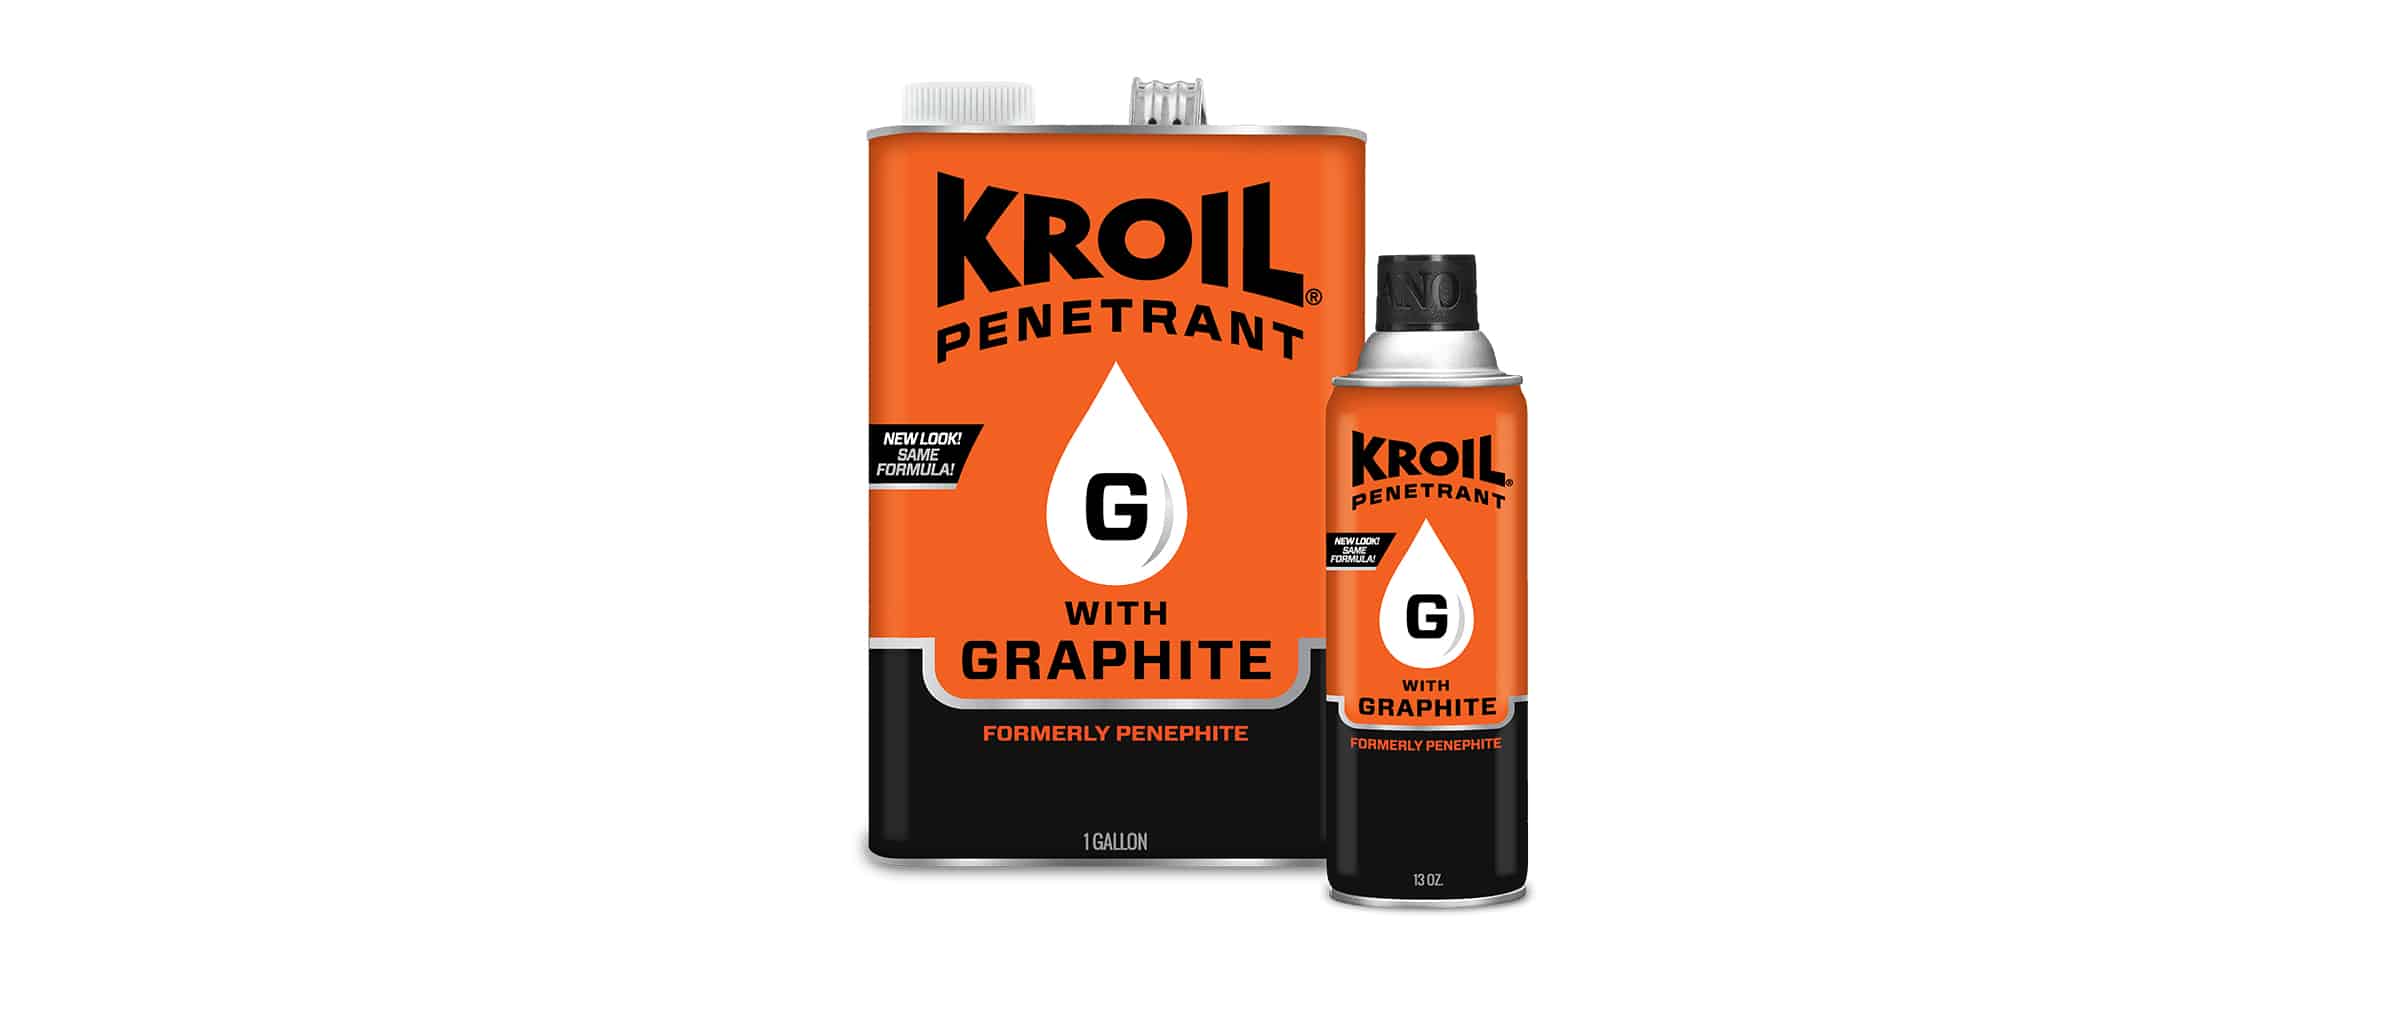 Kroil, penetrant, penetrating oil, graphite, lubricant